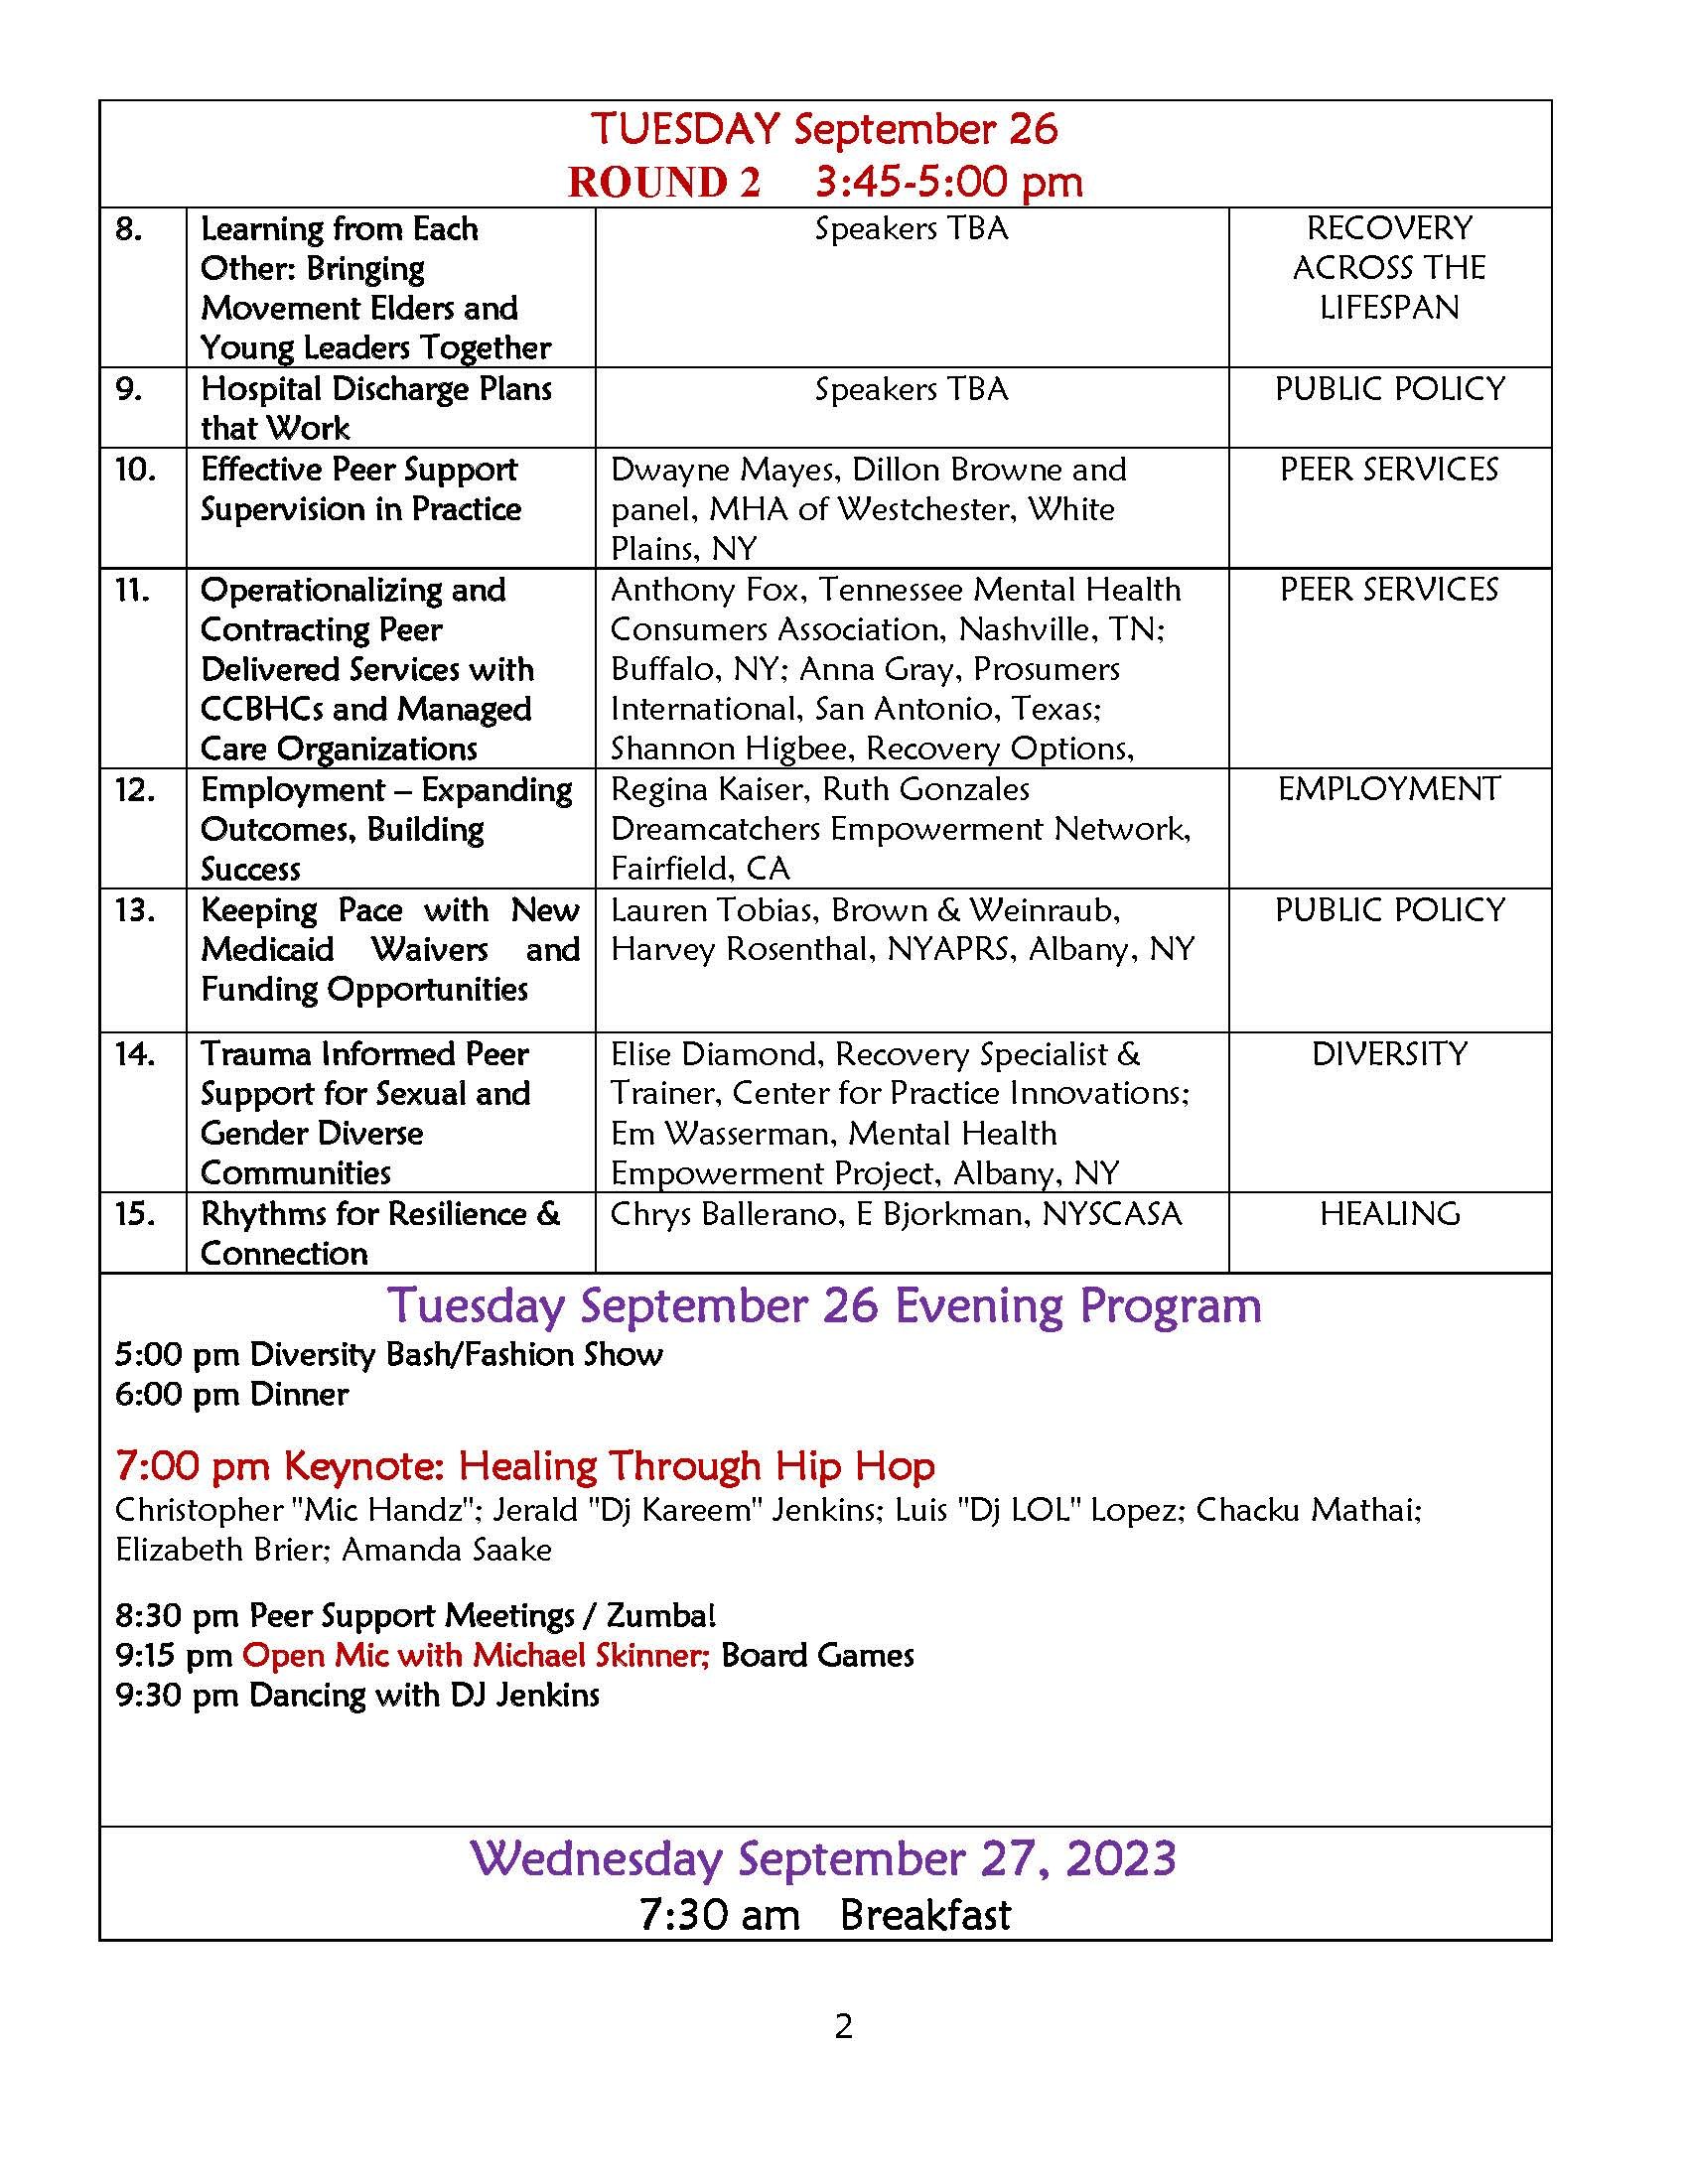 NYAPRS Conf 2023 Workshop Schedule Enews 817_Page_2.jpg